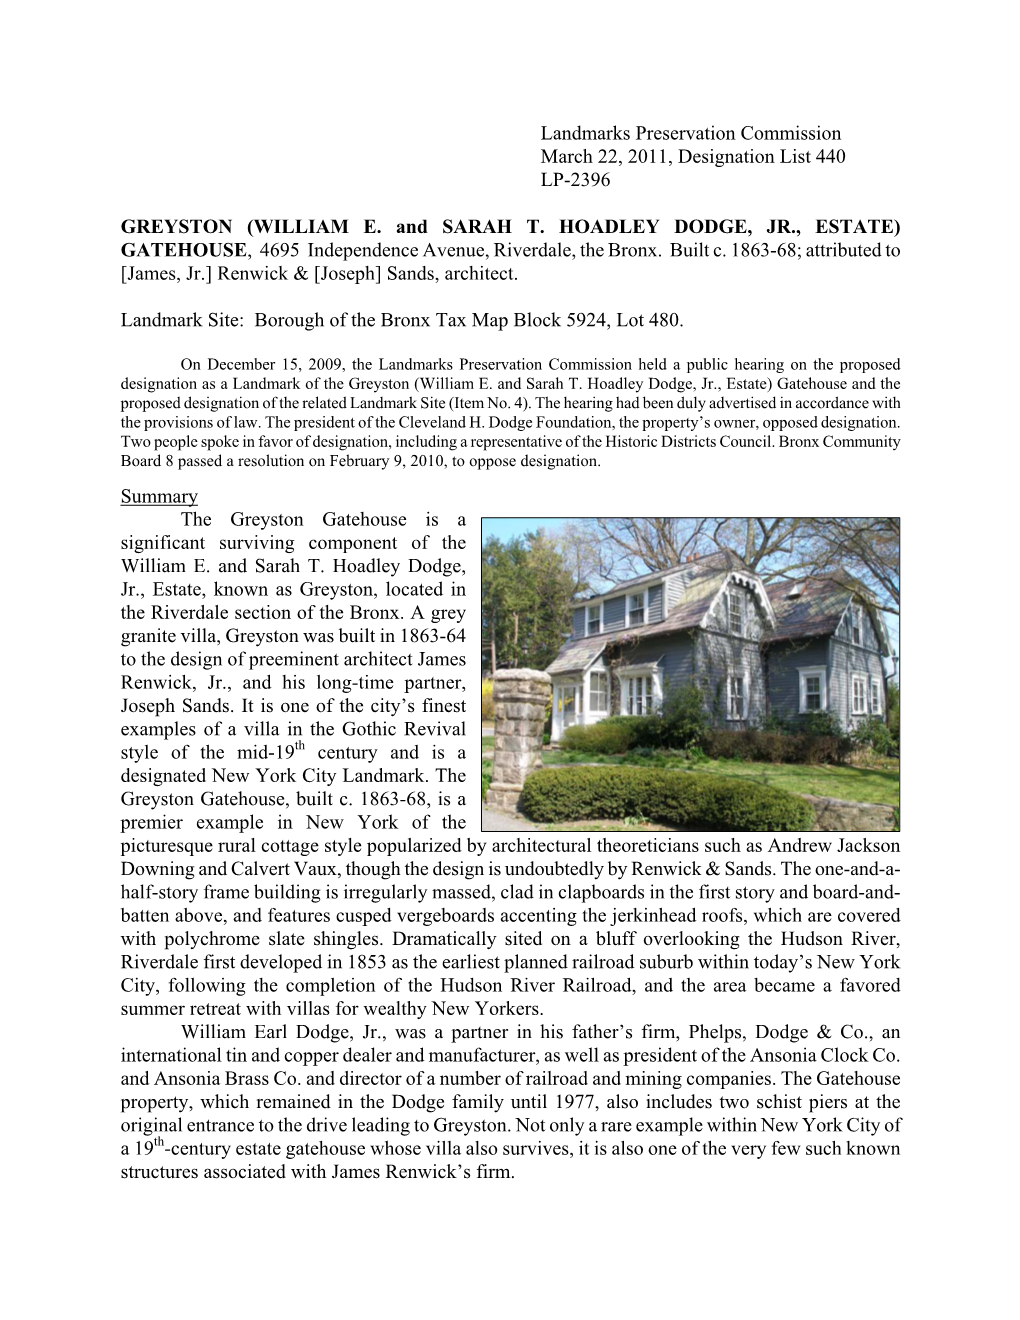 Landmarks Preservation Commission March 22, 2011, Designation List 440 LP-2396